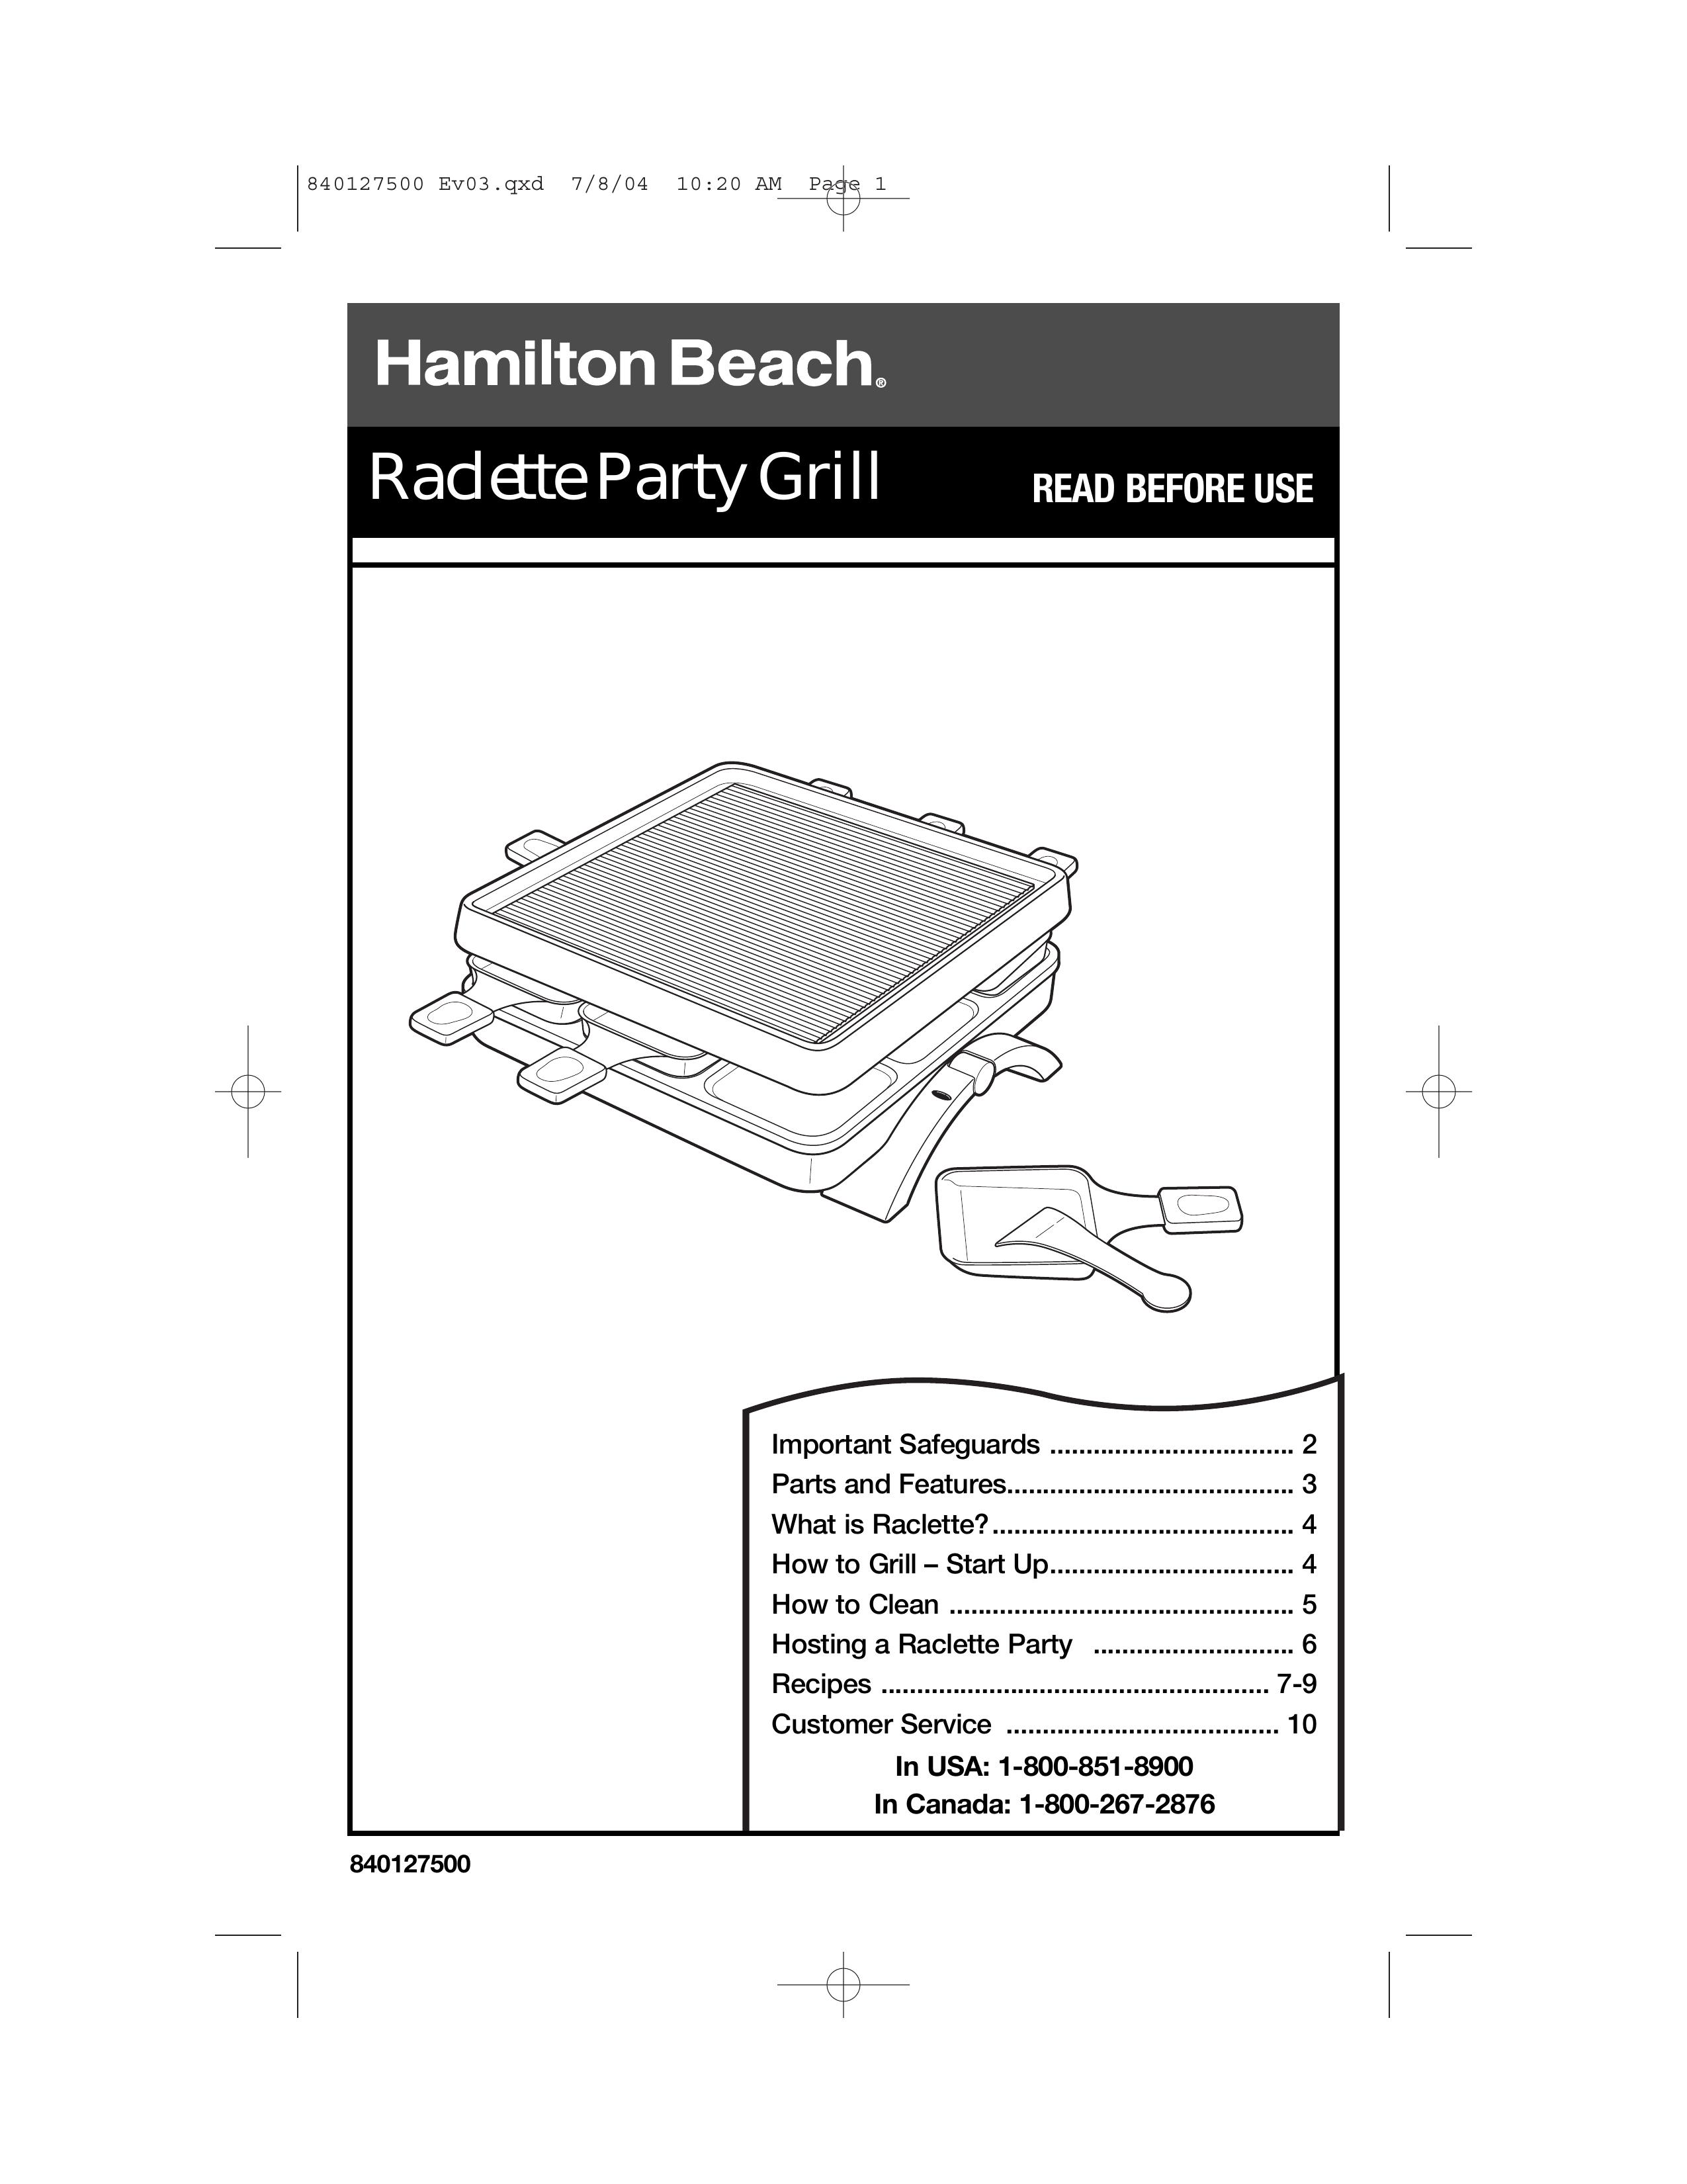 Hamilton Beach 31602 Gas Grill User Manual